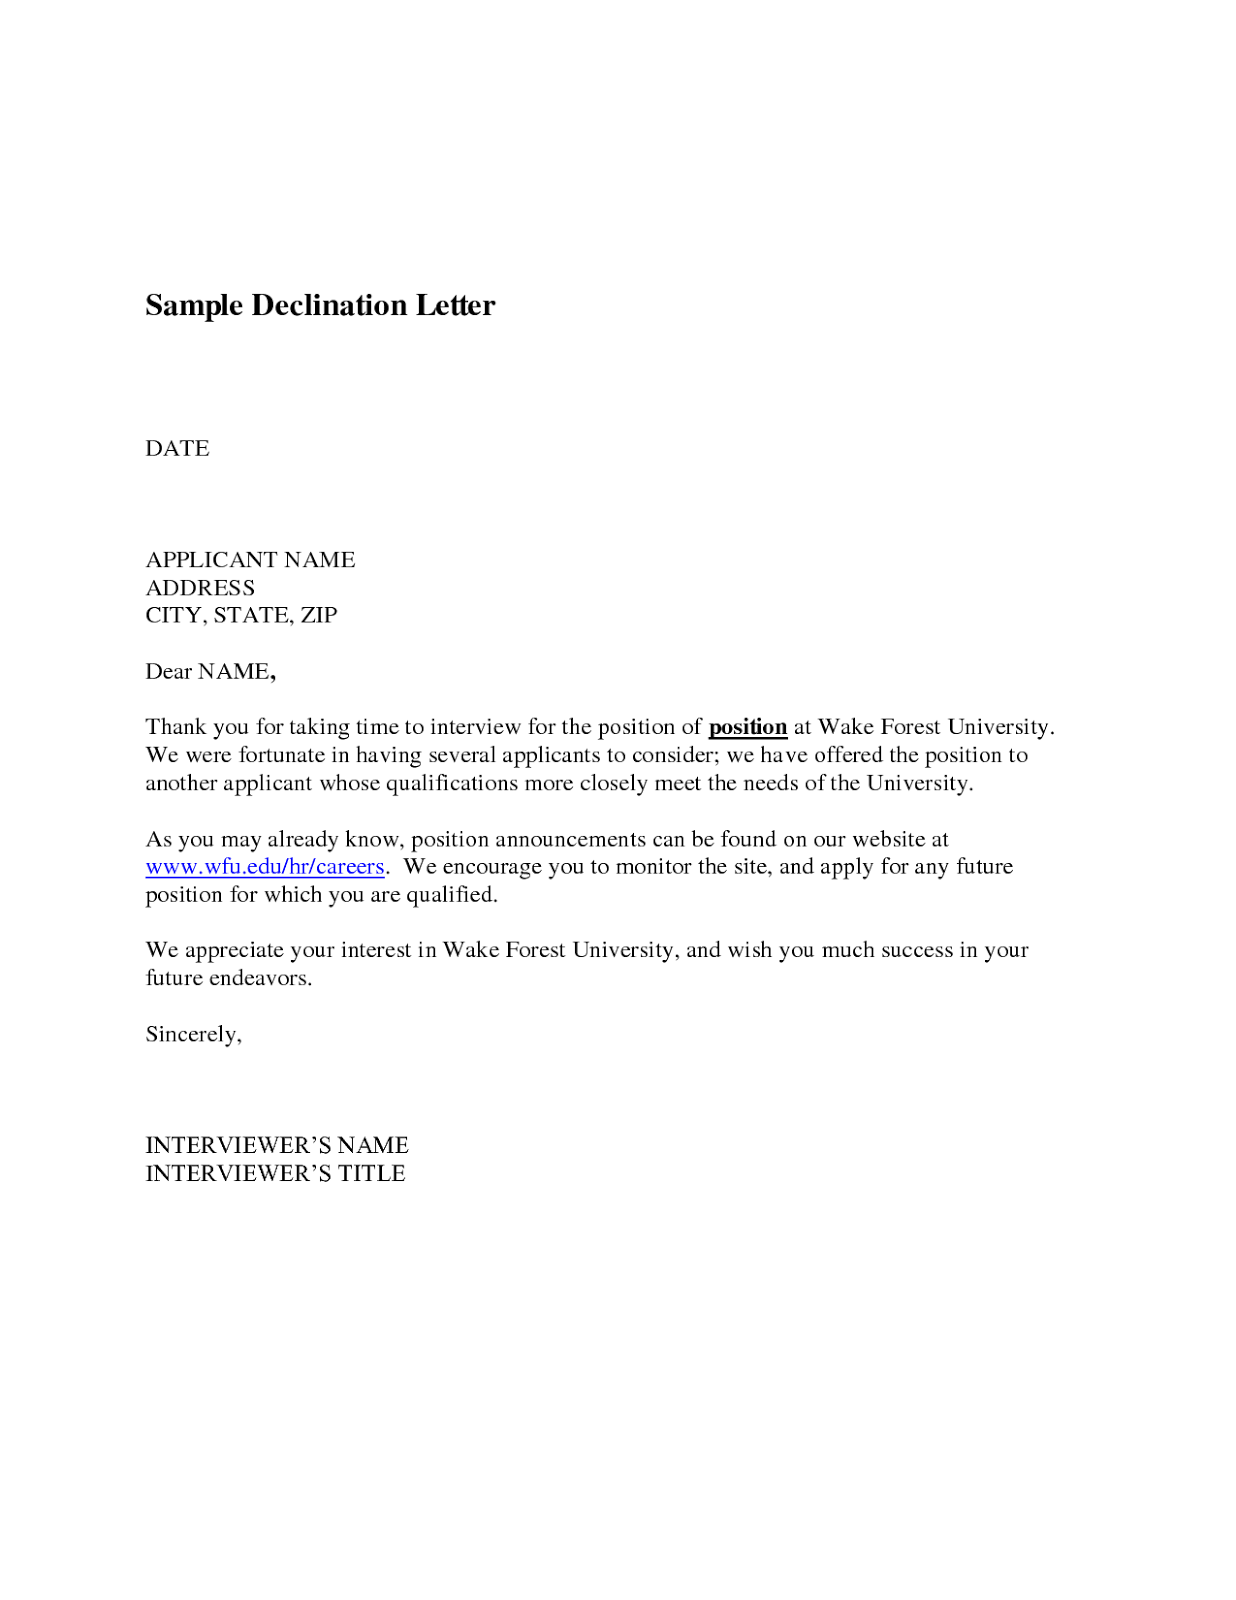 Resume cover letter samples free